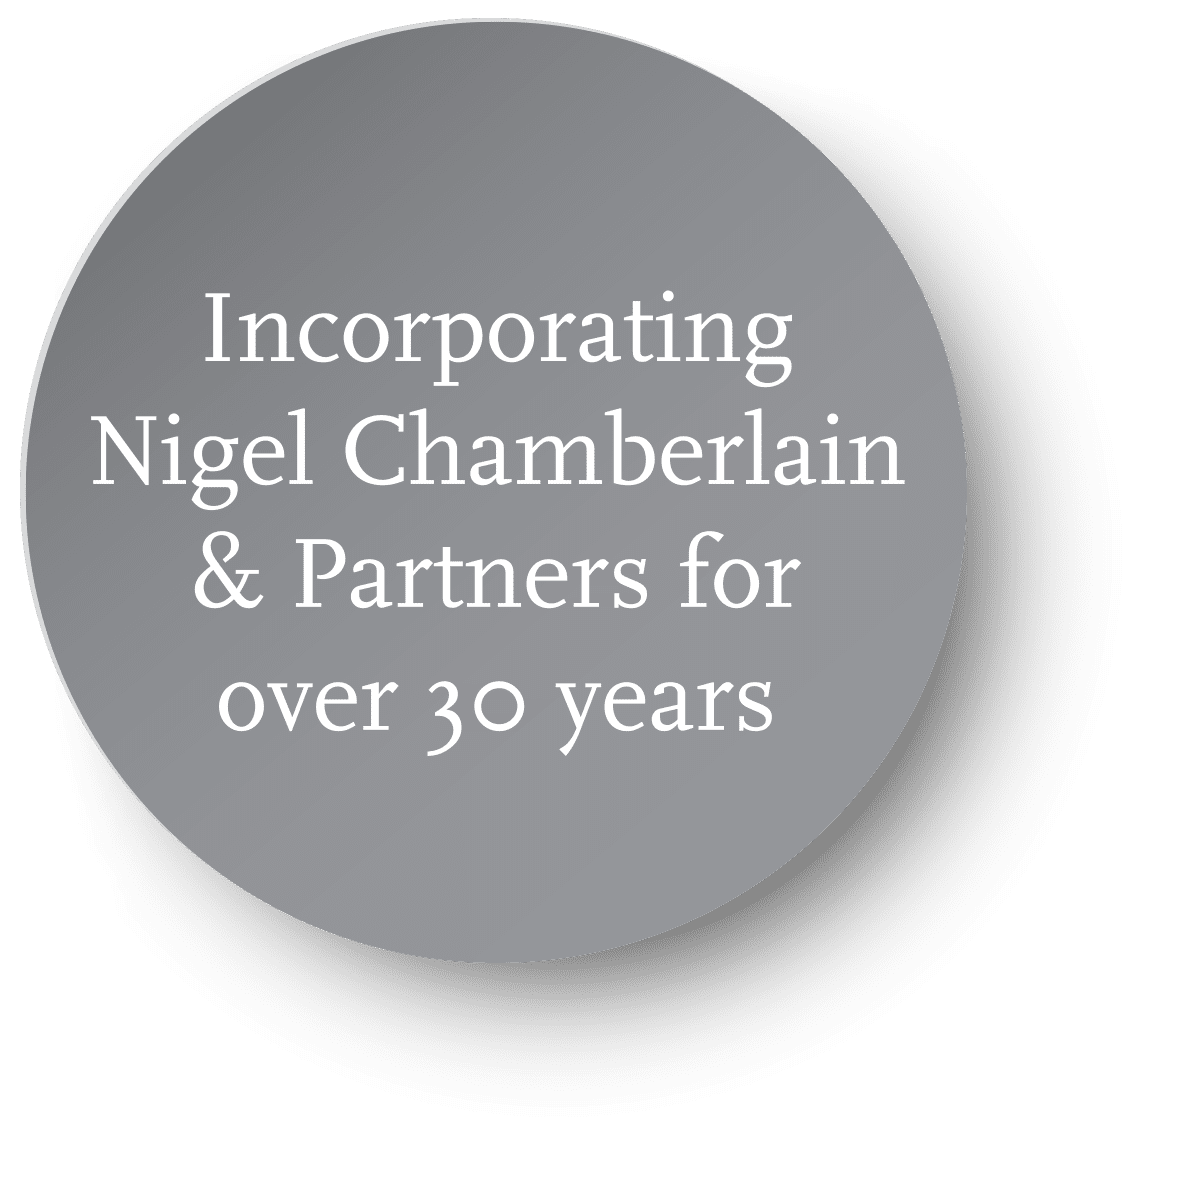 Incorporating Nigel Chamberlain & Partners for over 30 years